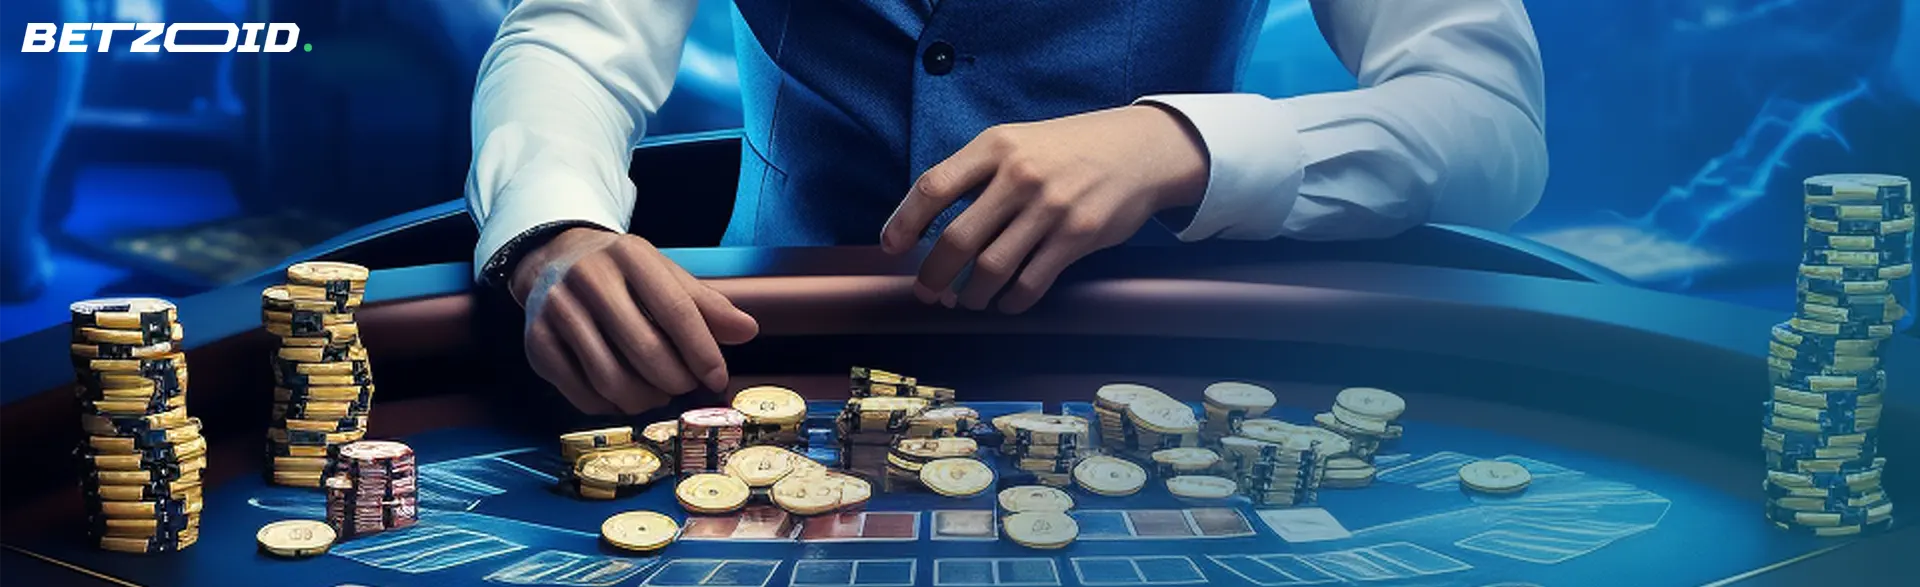 Dealer's hand spreading chips at casinos accepting minimum deposits.